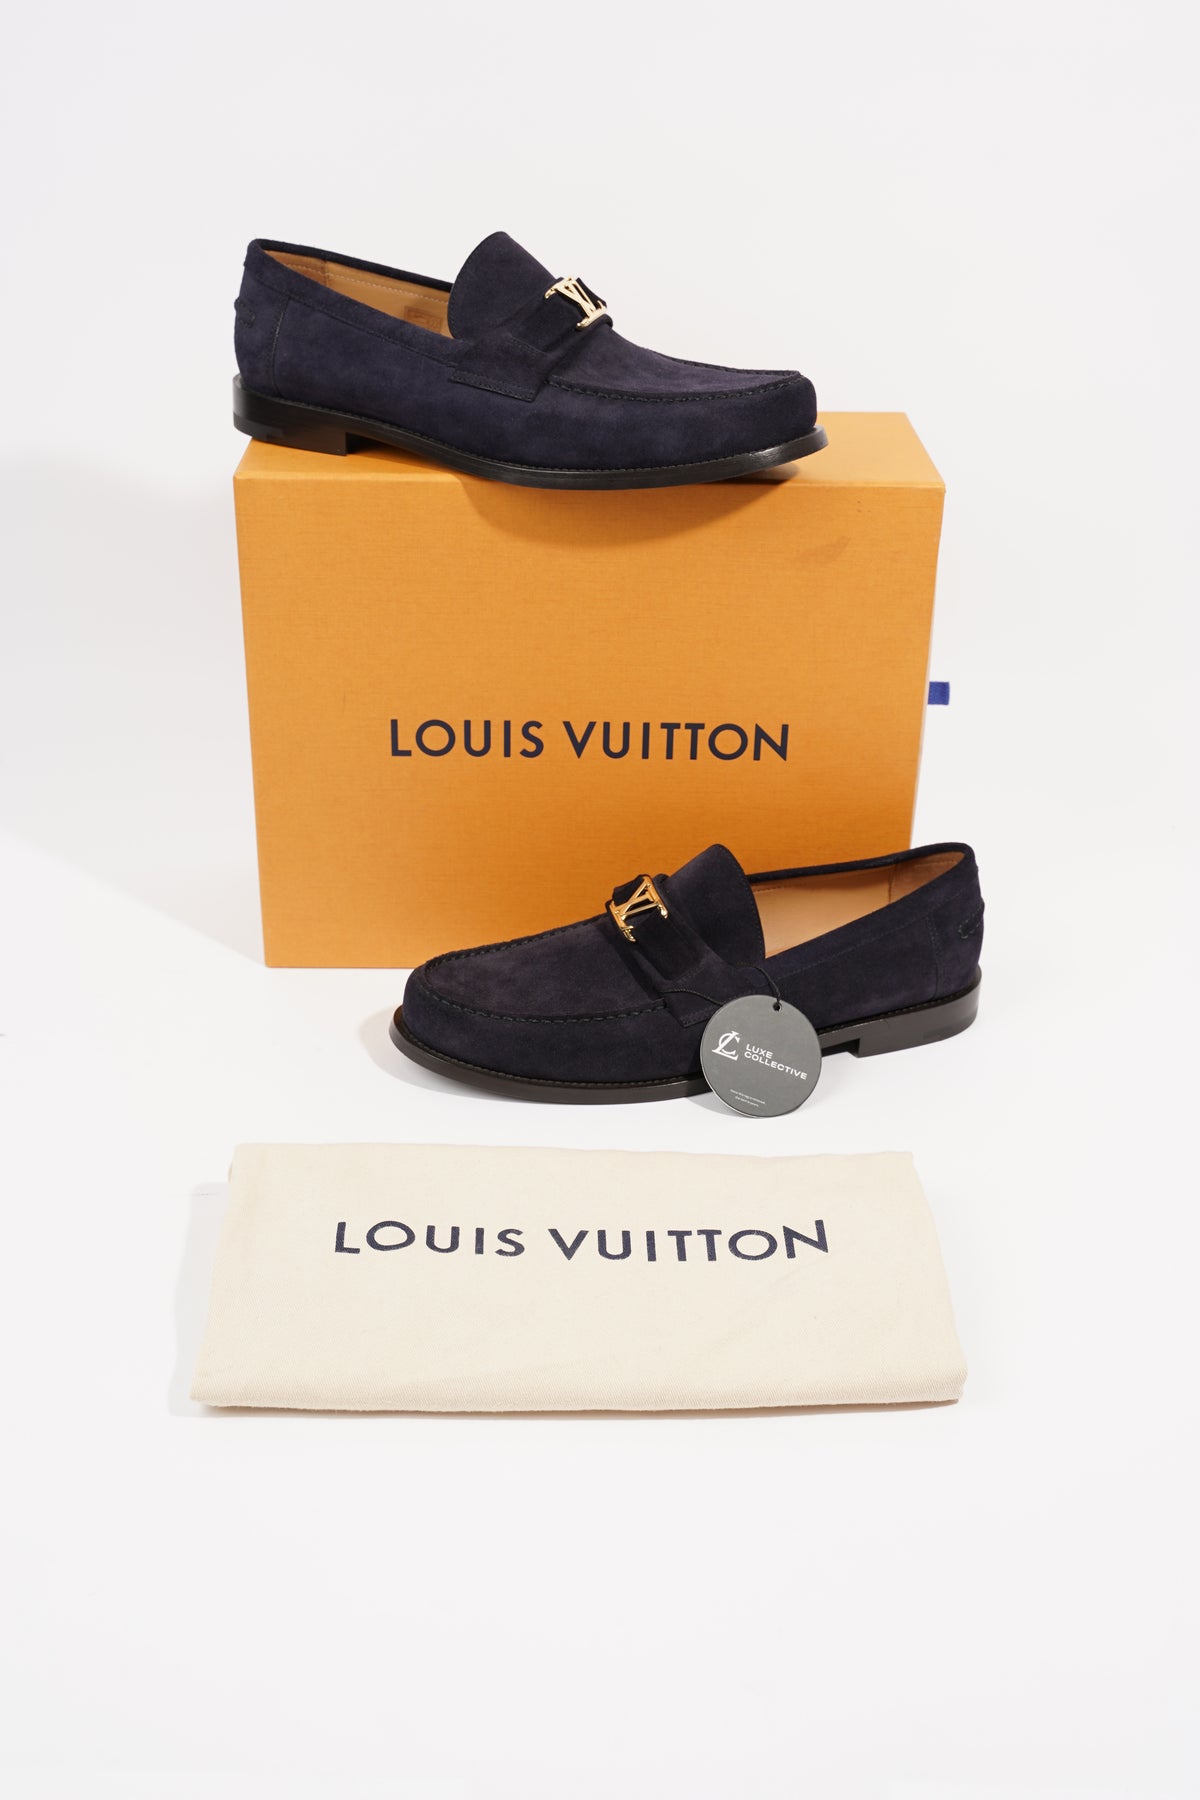 Louis Vuitton Mens Suede Loafers Navy EU 42.5 / UK 8.5 – Luxe